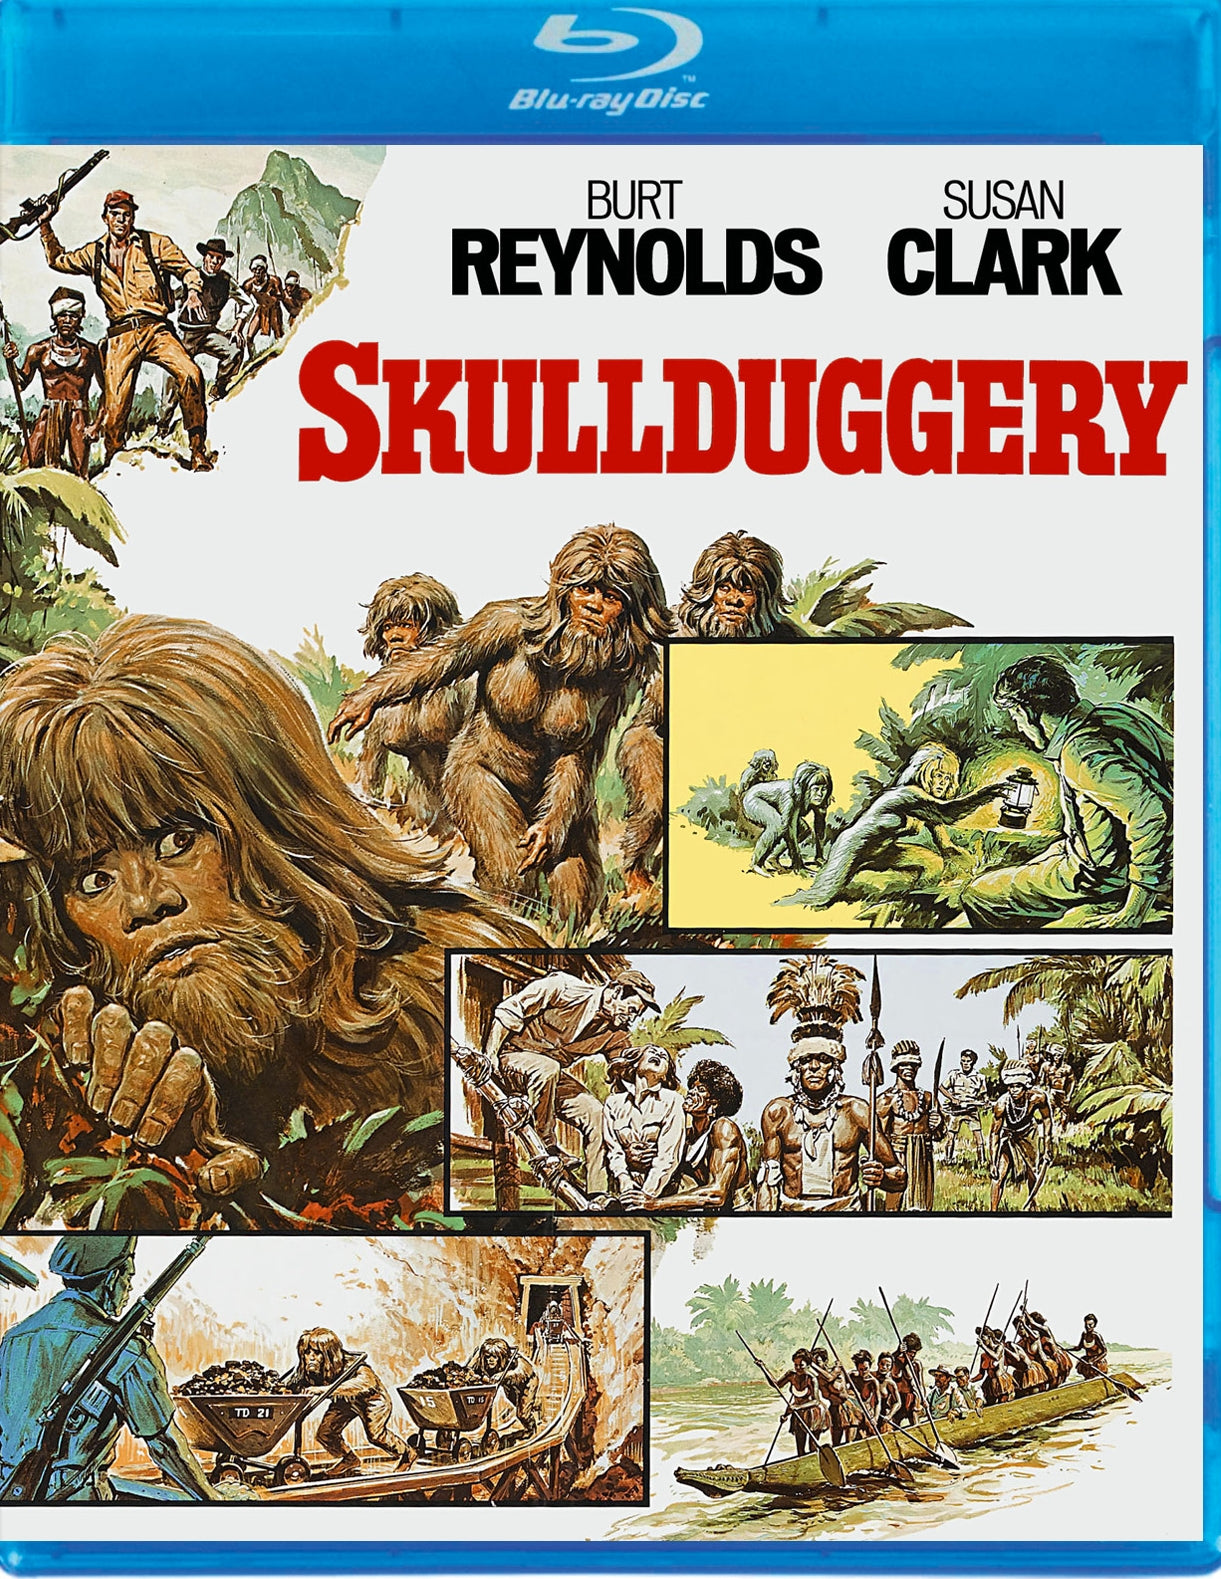 Skullduggery [Blu-ray] cover art